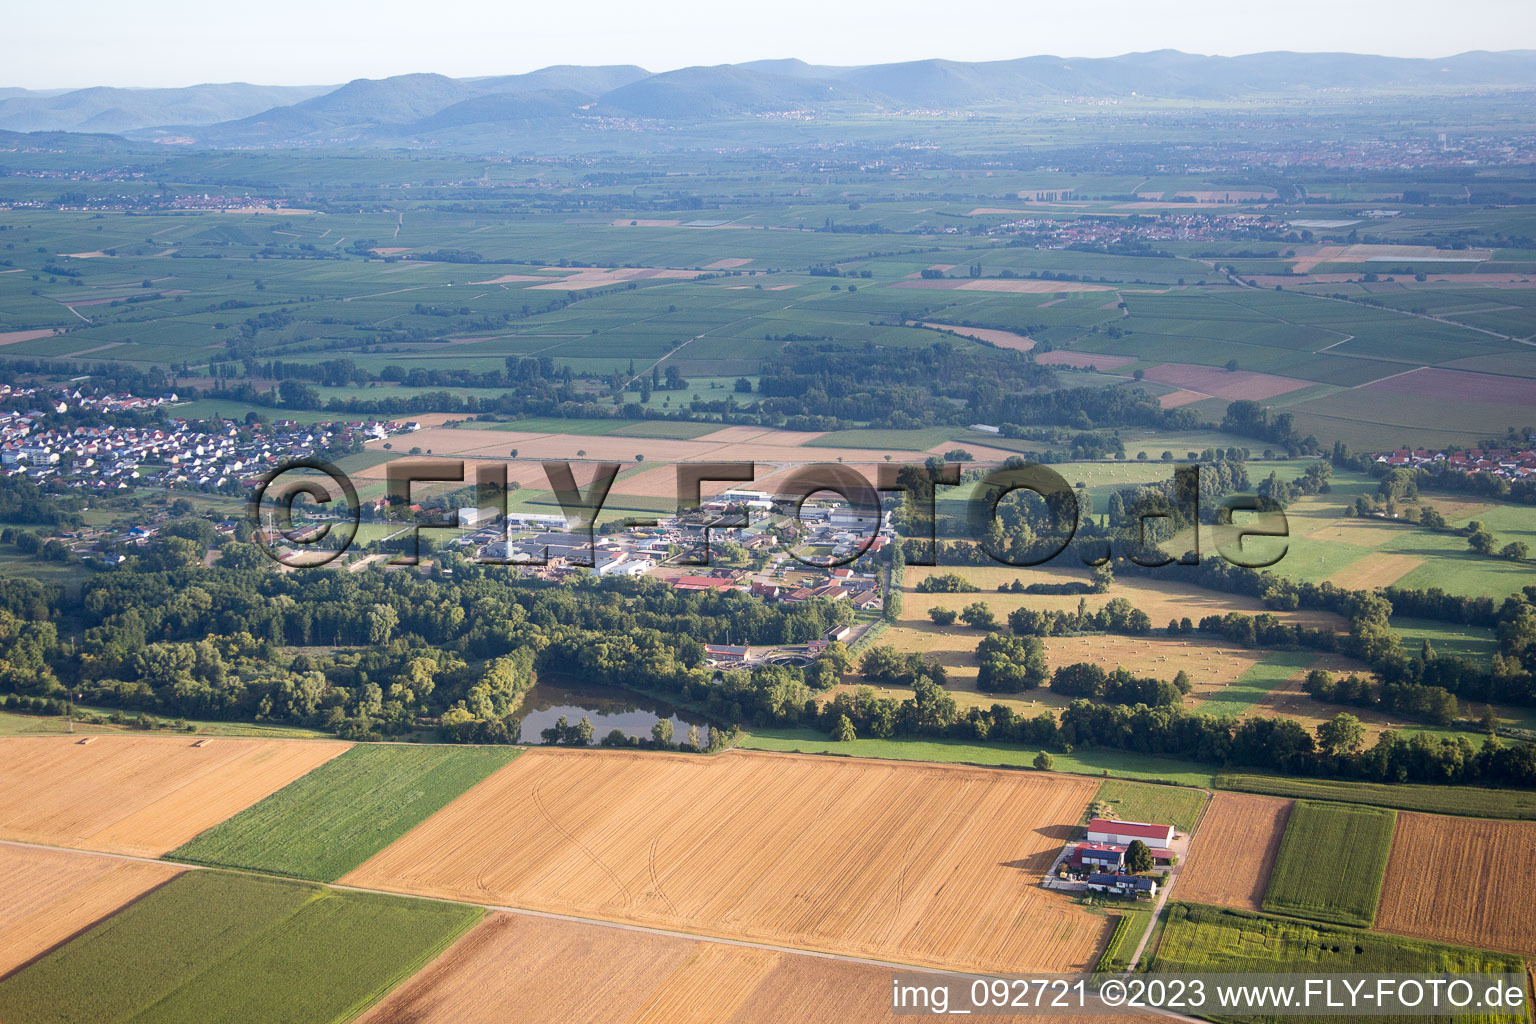 Cheap home, industrial area east in Billigheim-Ingenheim in the state Rhineland-Palatinate, Germany